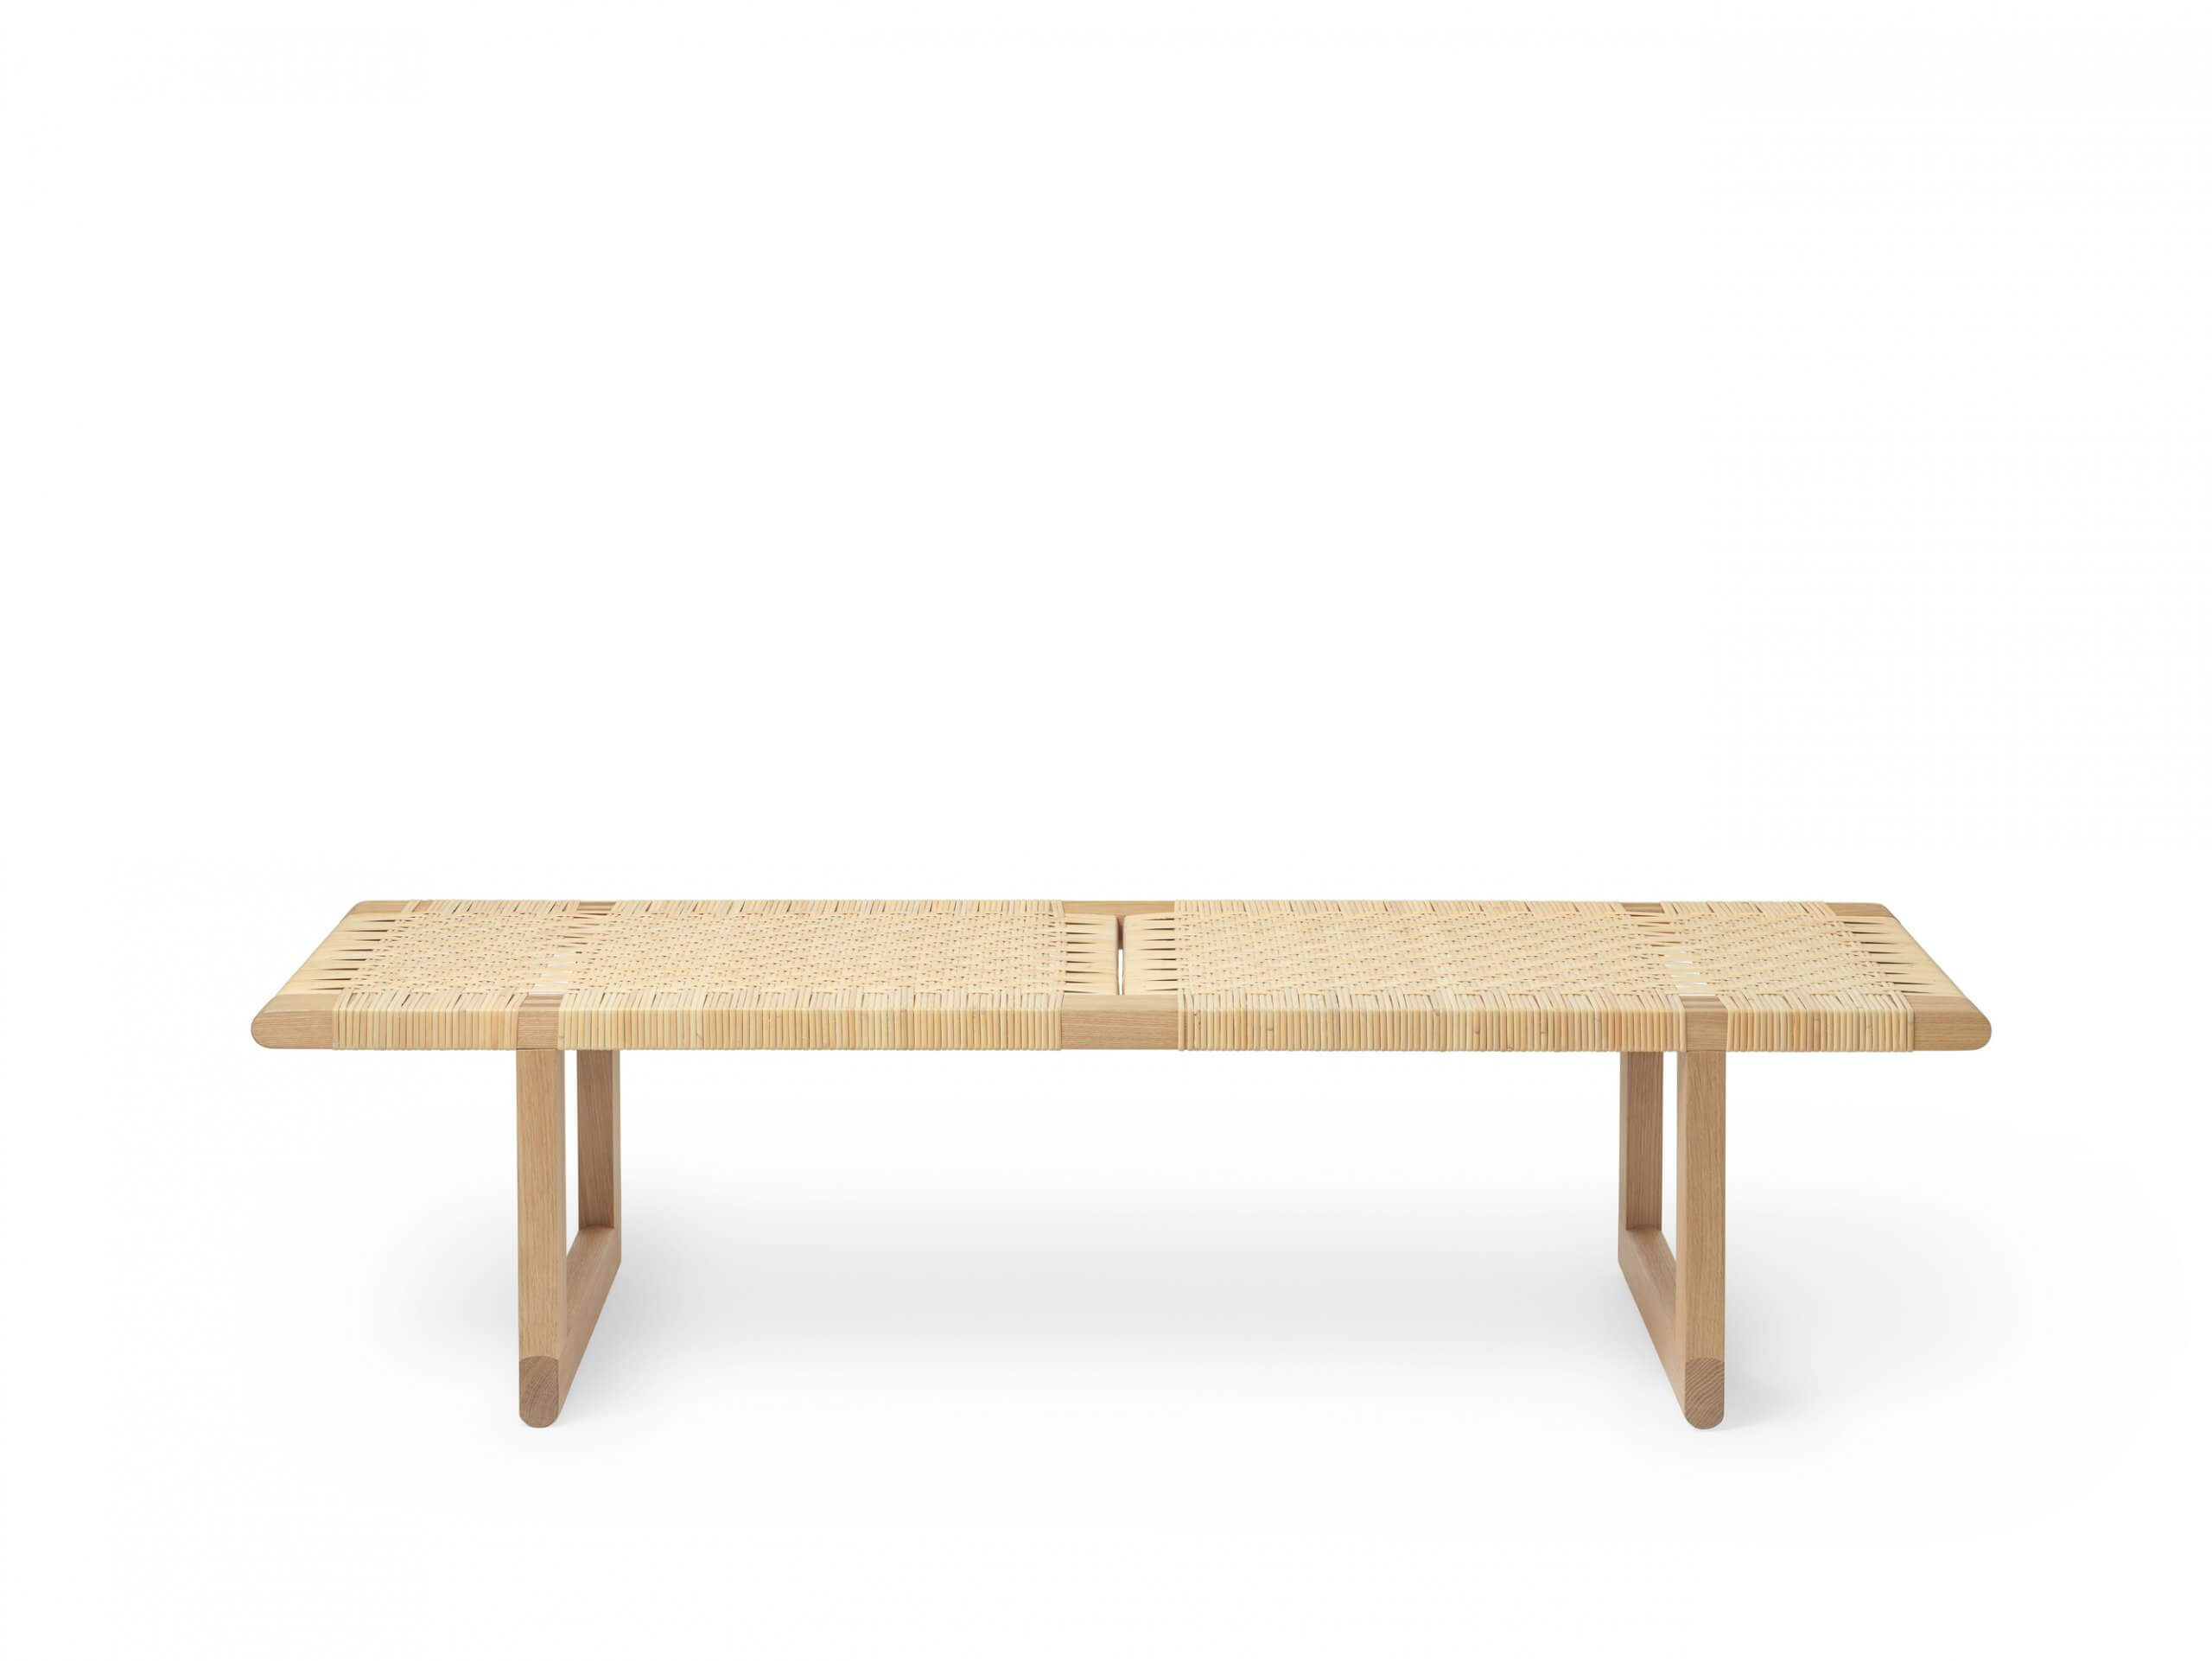 BM0488 bench / table